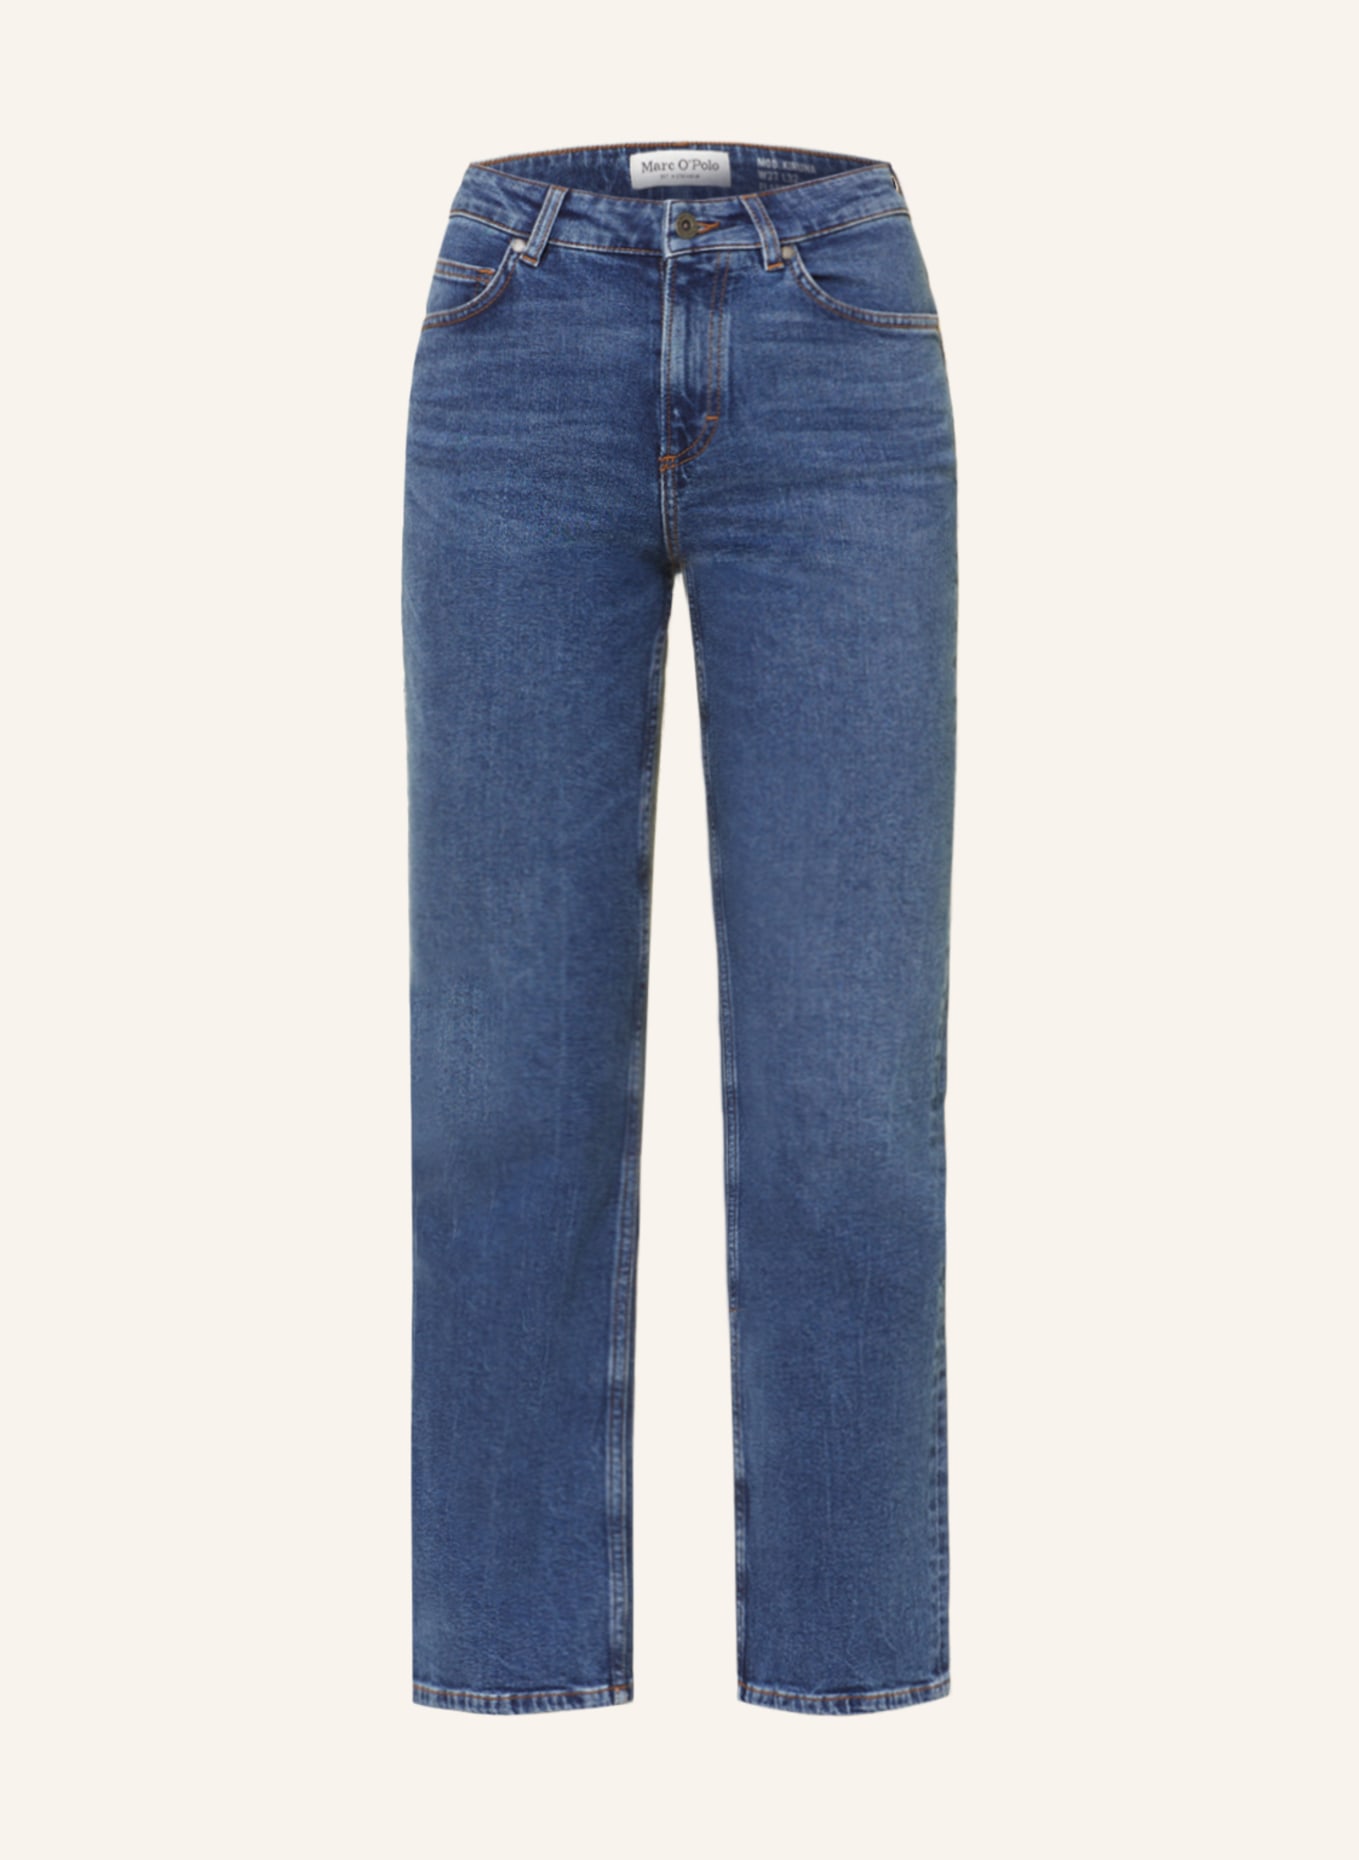 Marc O'Polo Flared Jeans KIRUNA, Farbe: 032 Dark blue vintage wash (Bild 1)